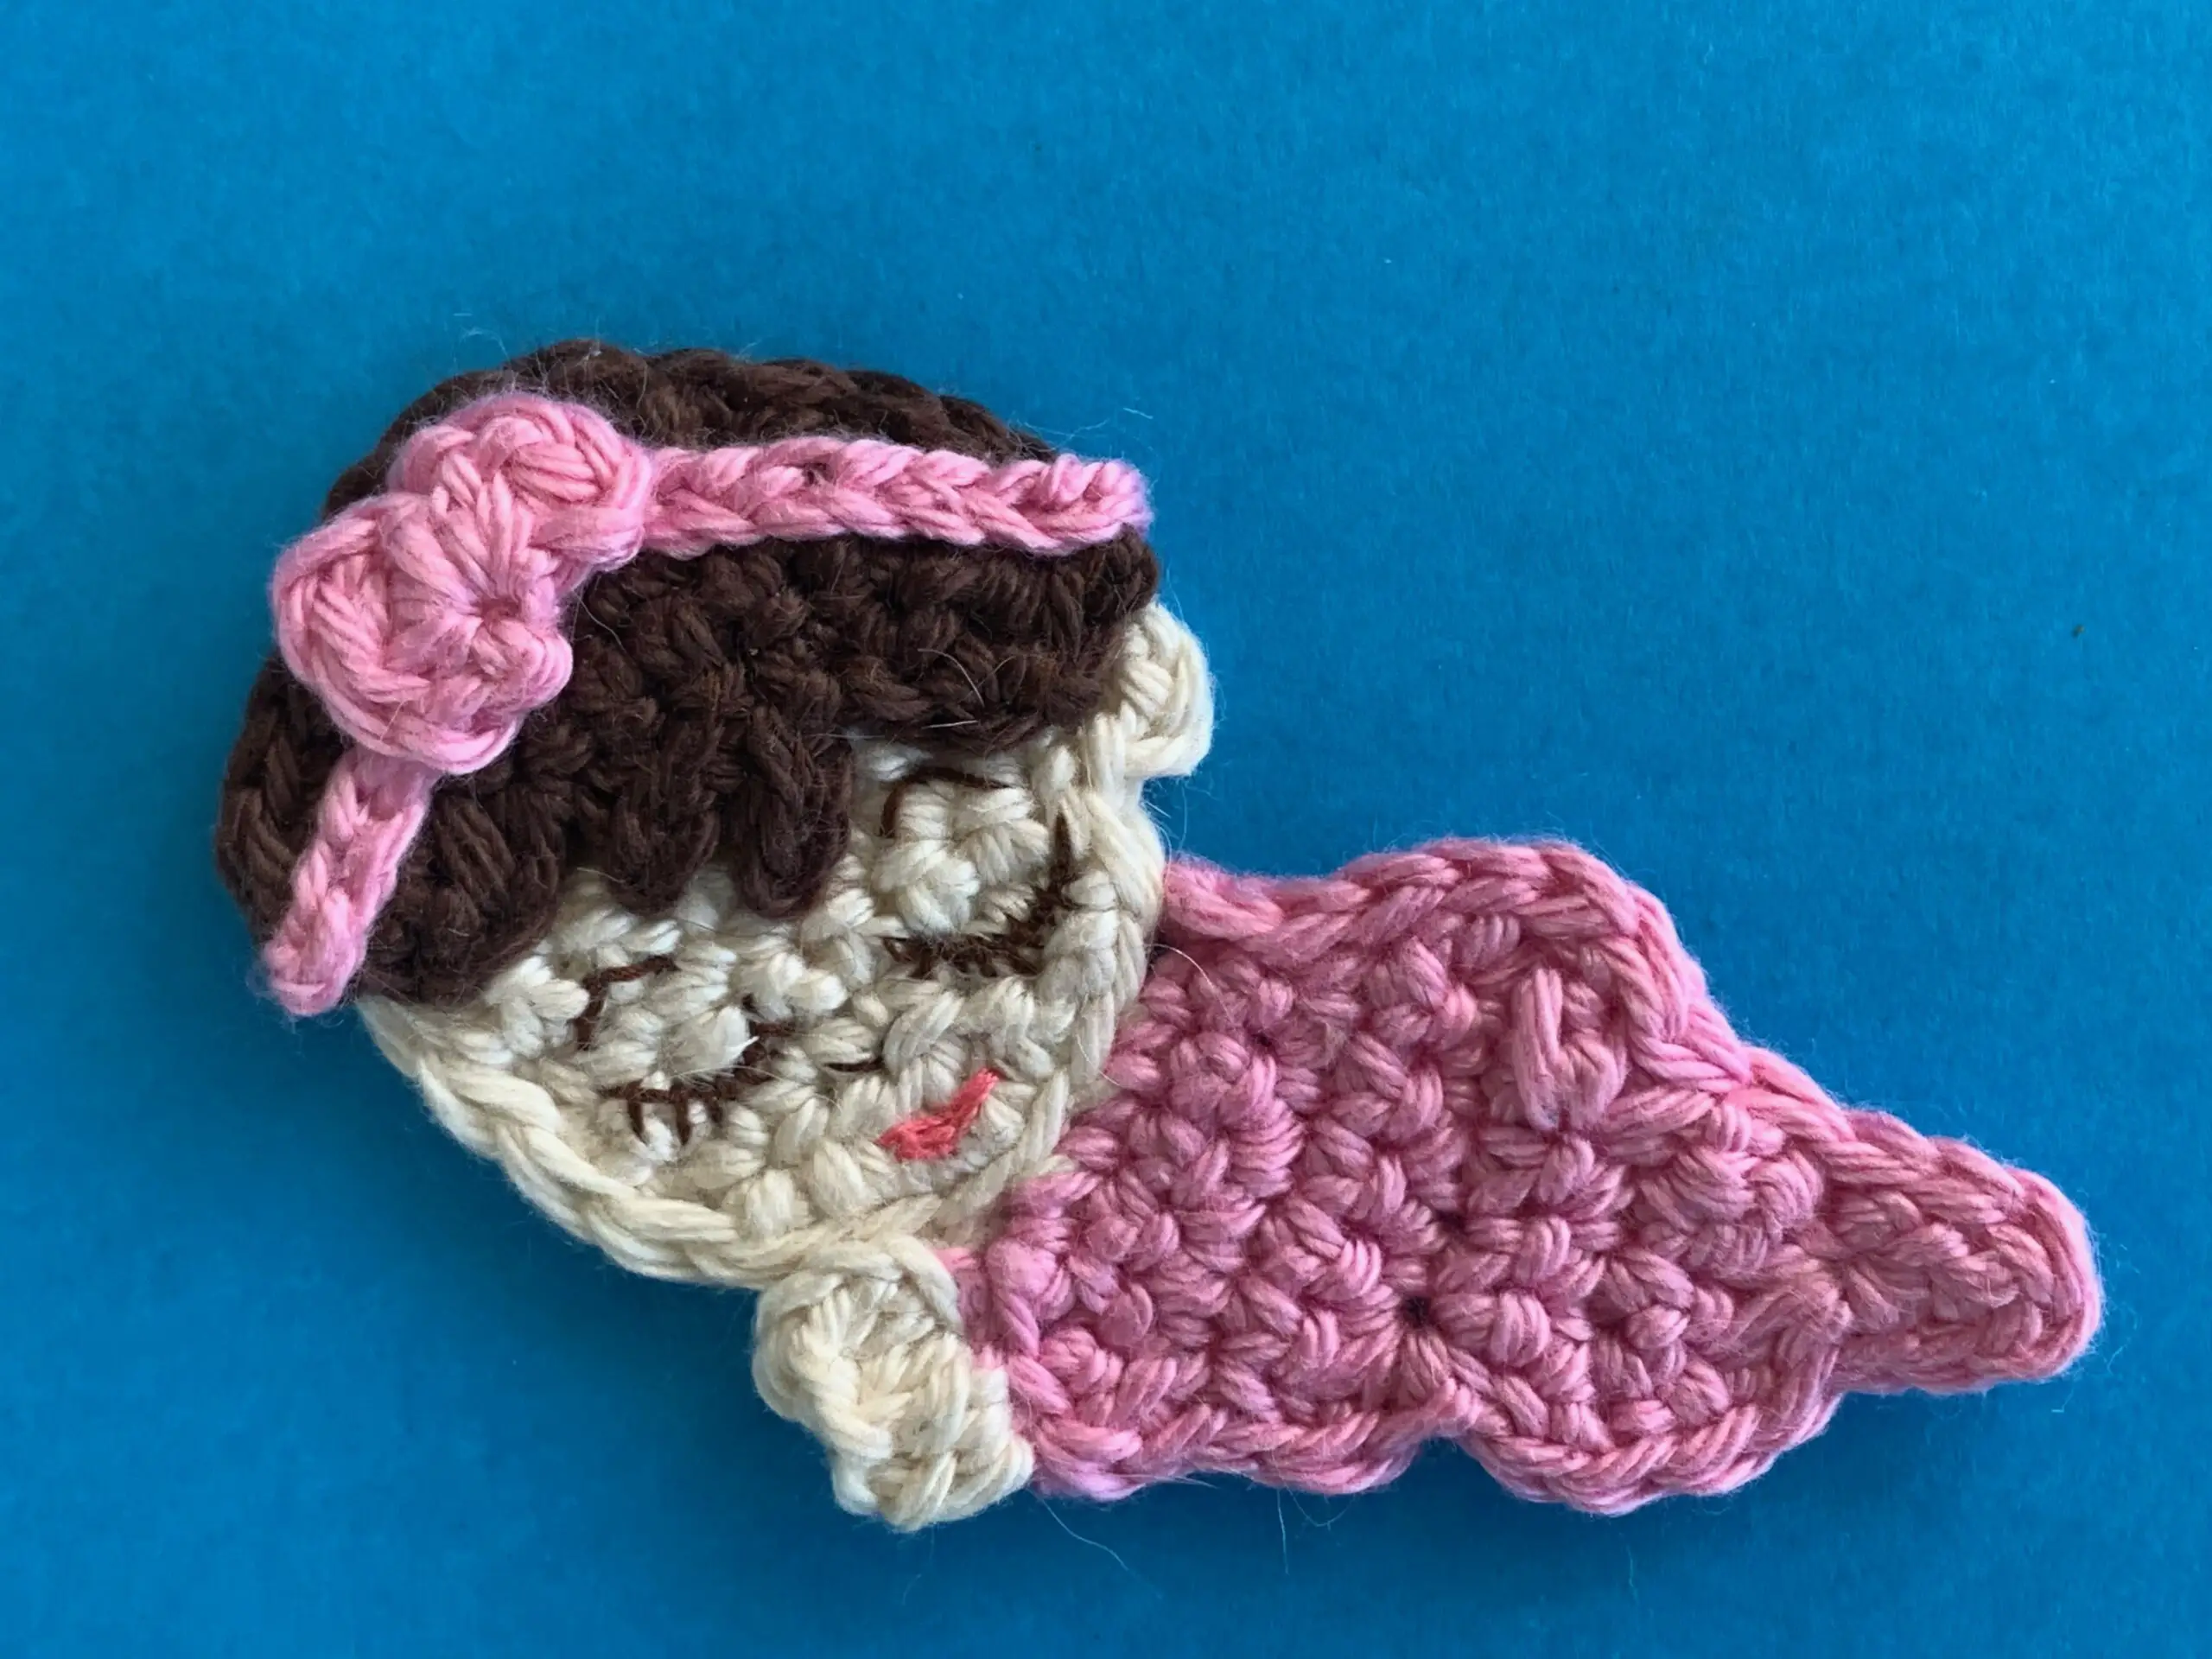 Finished crochet sleeping baby 4 ply landscape